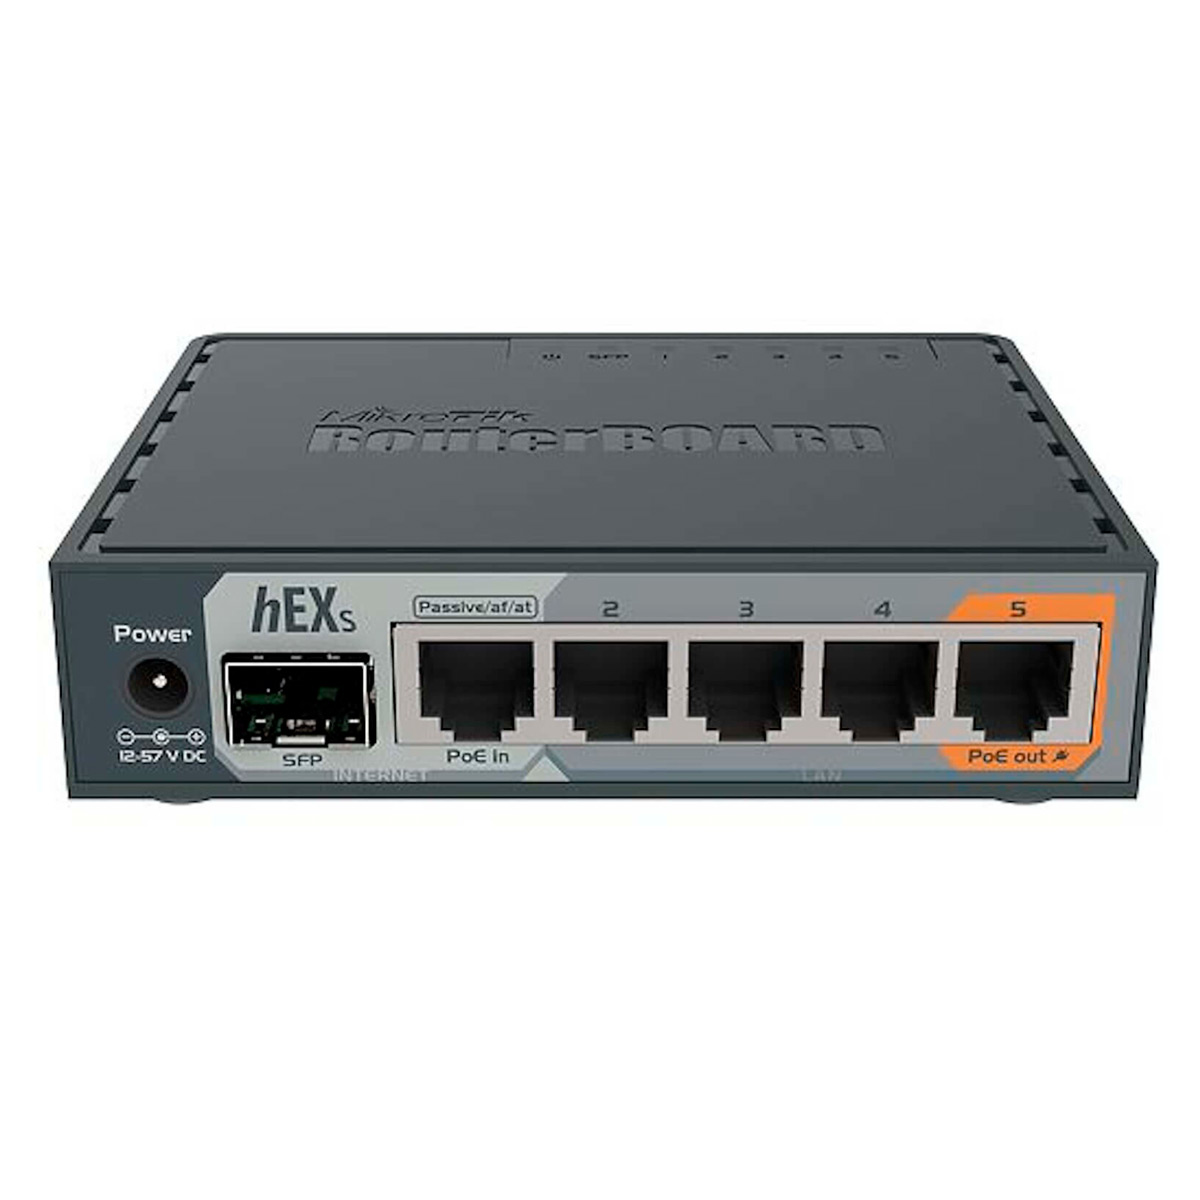 Roteador Mikrotik hEX S - 5 Portas Gigabit - 1 Porta SFP - RouterOS - RB760IGS